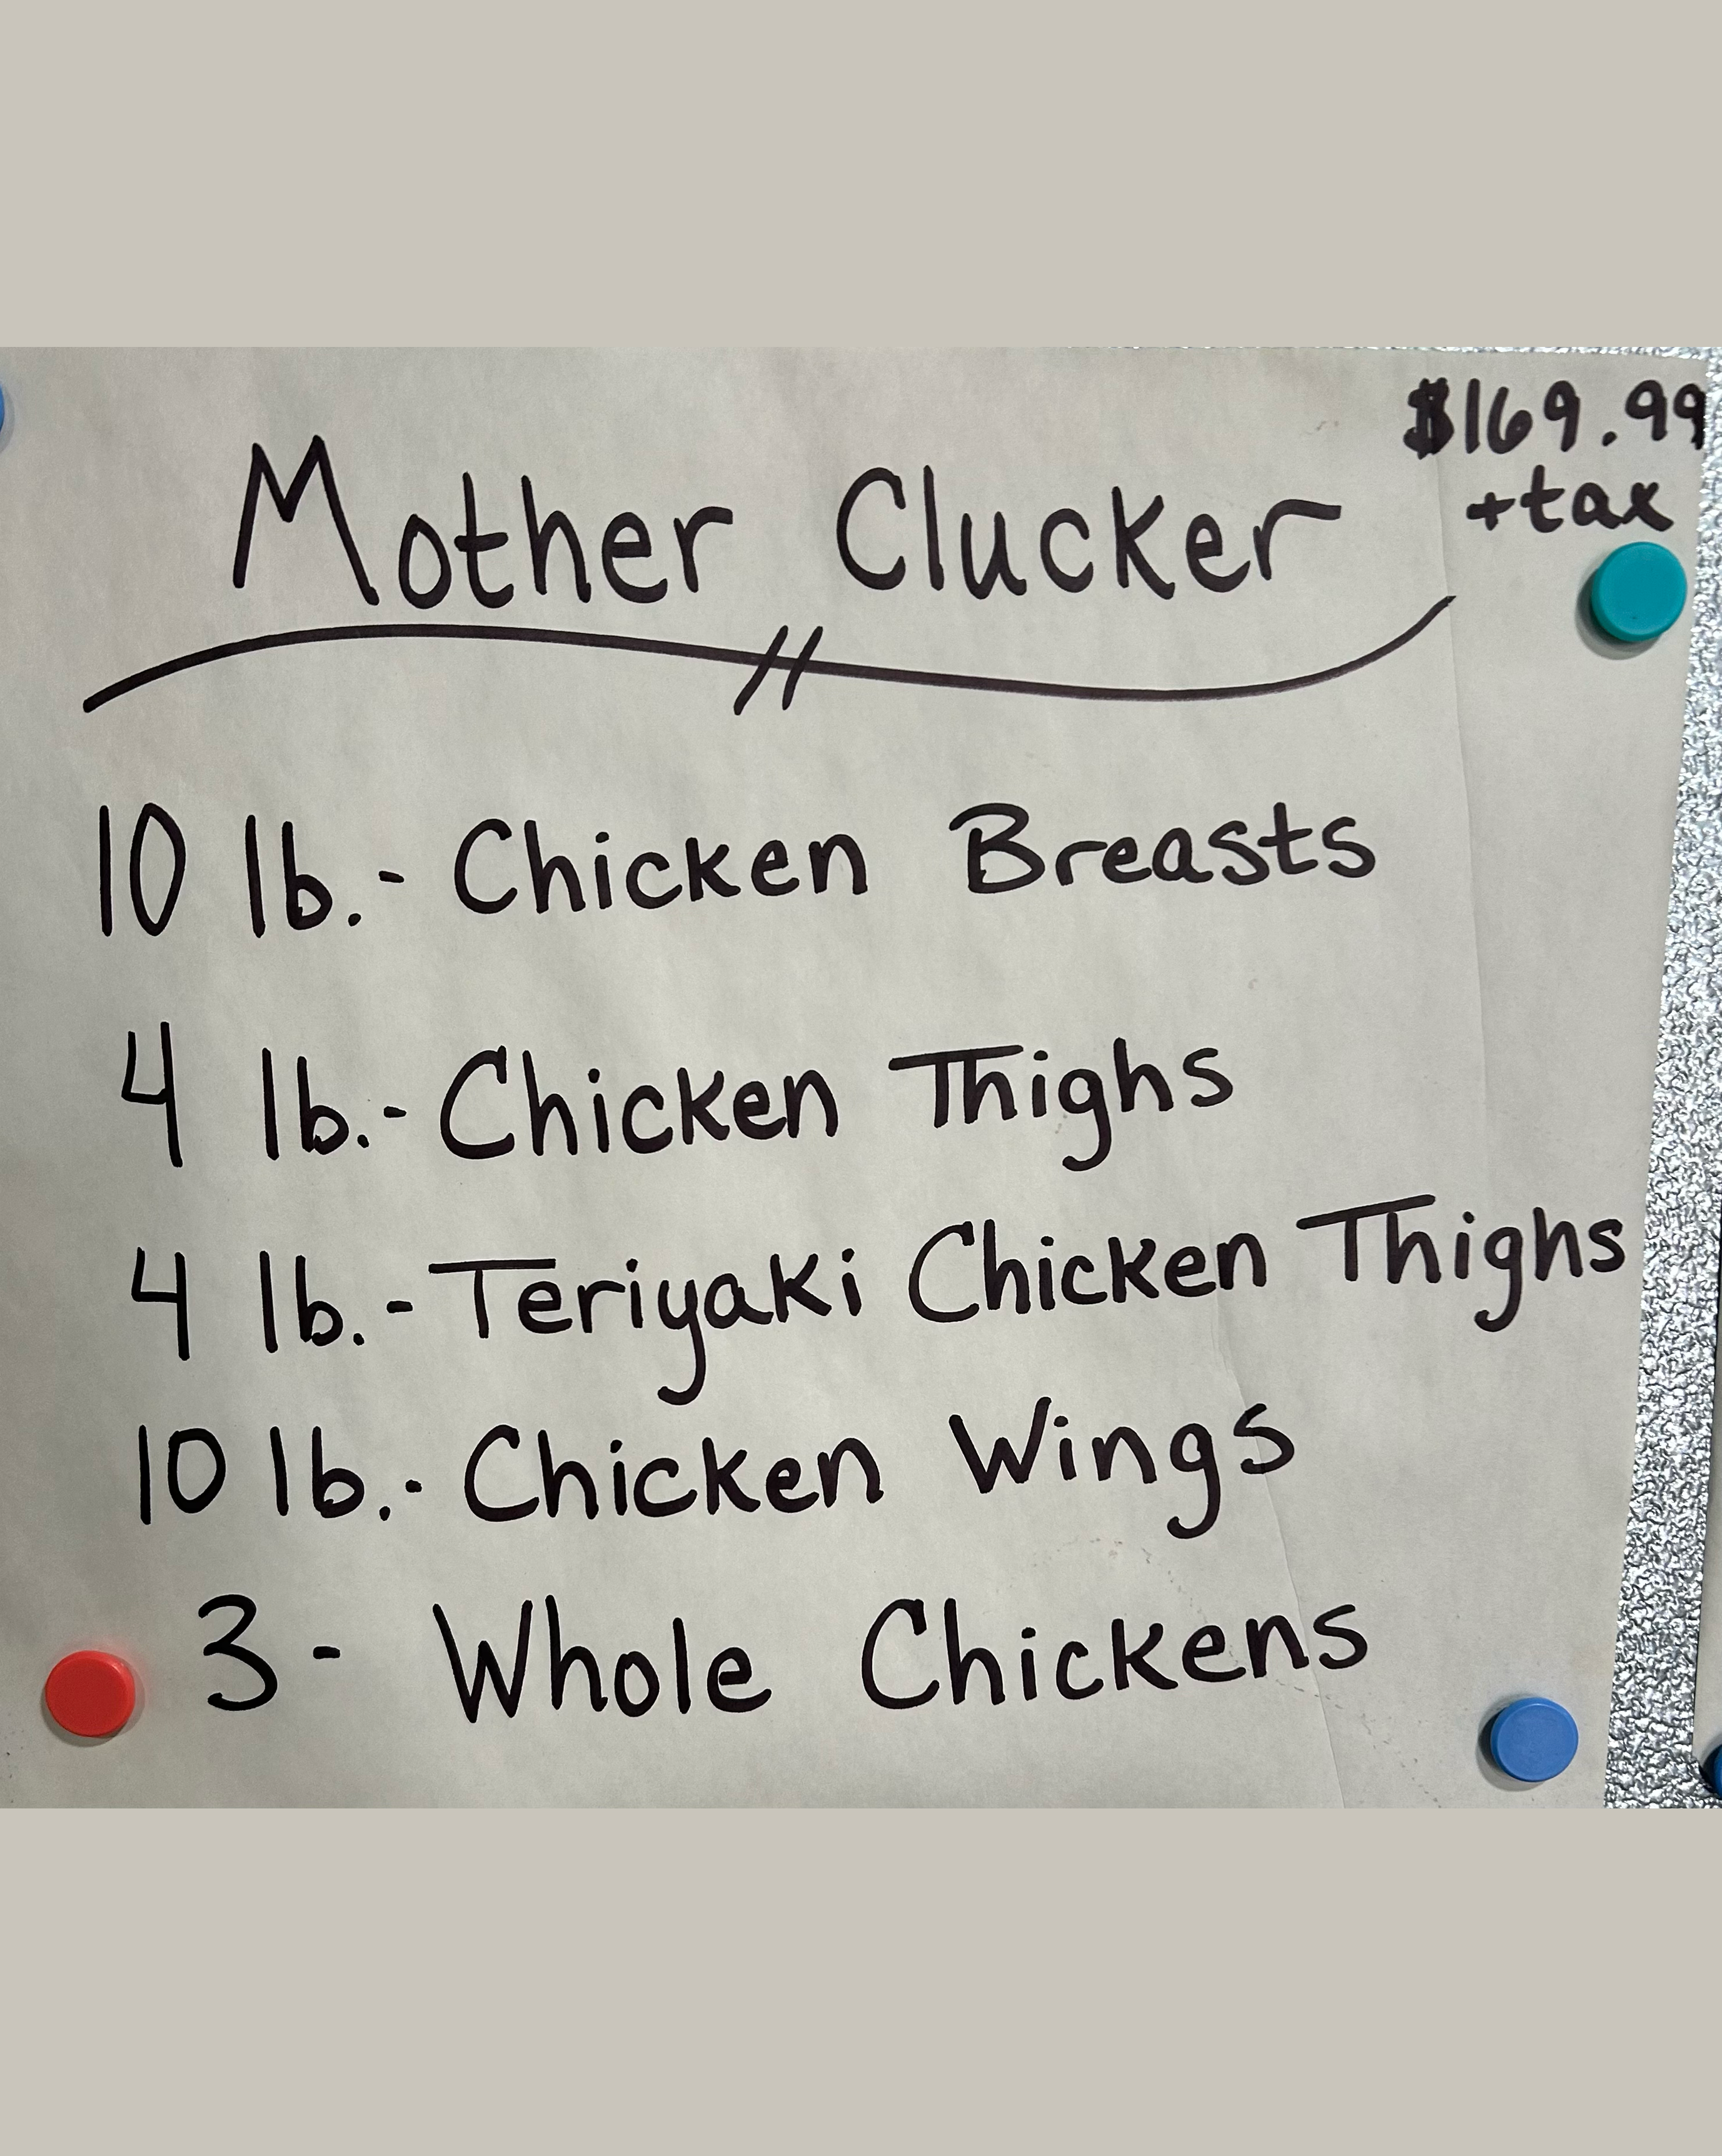 Mother Clucker